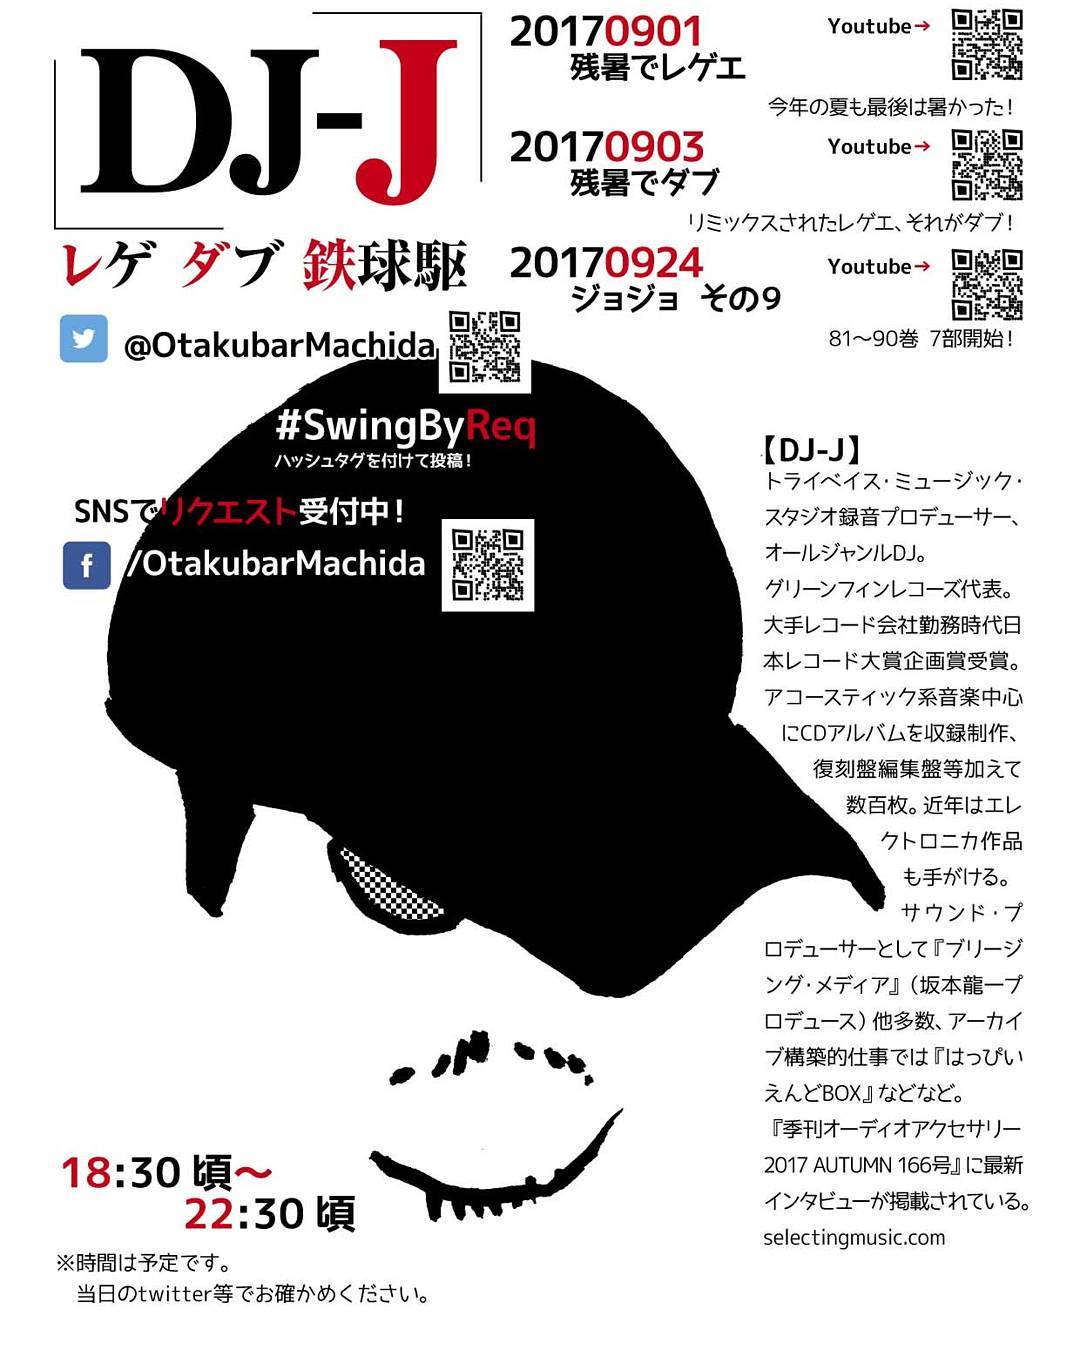 DJ-J 9月のイベントです。9/1 残暑でレゲエ9/3 残暑でダブ9/24 ジョジョその９いずれもリクエスト募集中♪#otakubar #dj